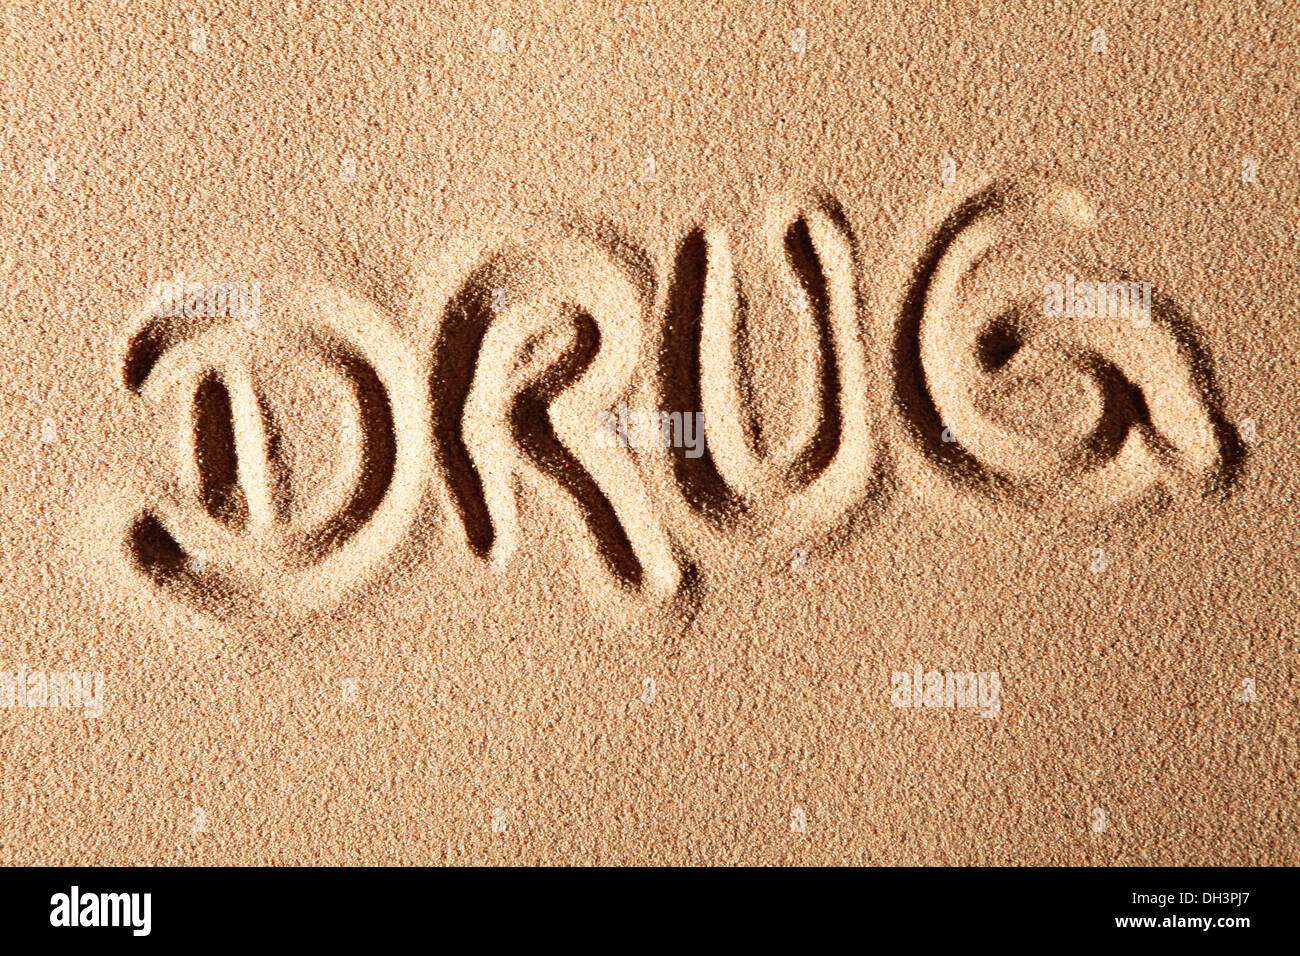 La palabra droga, dibujado en la arena Foto de stock